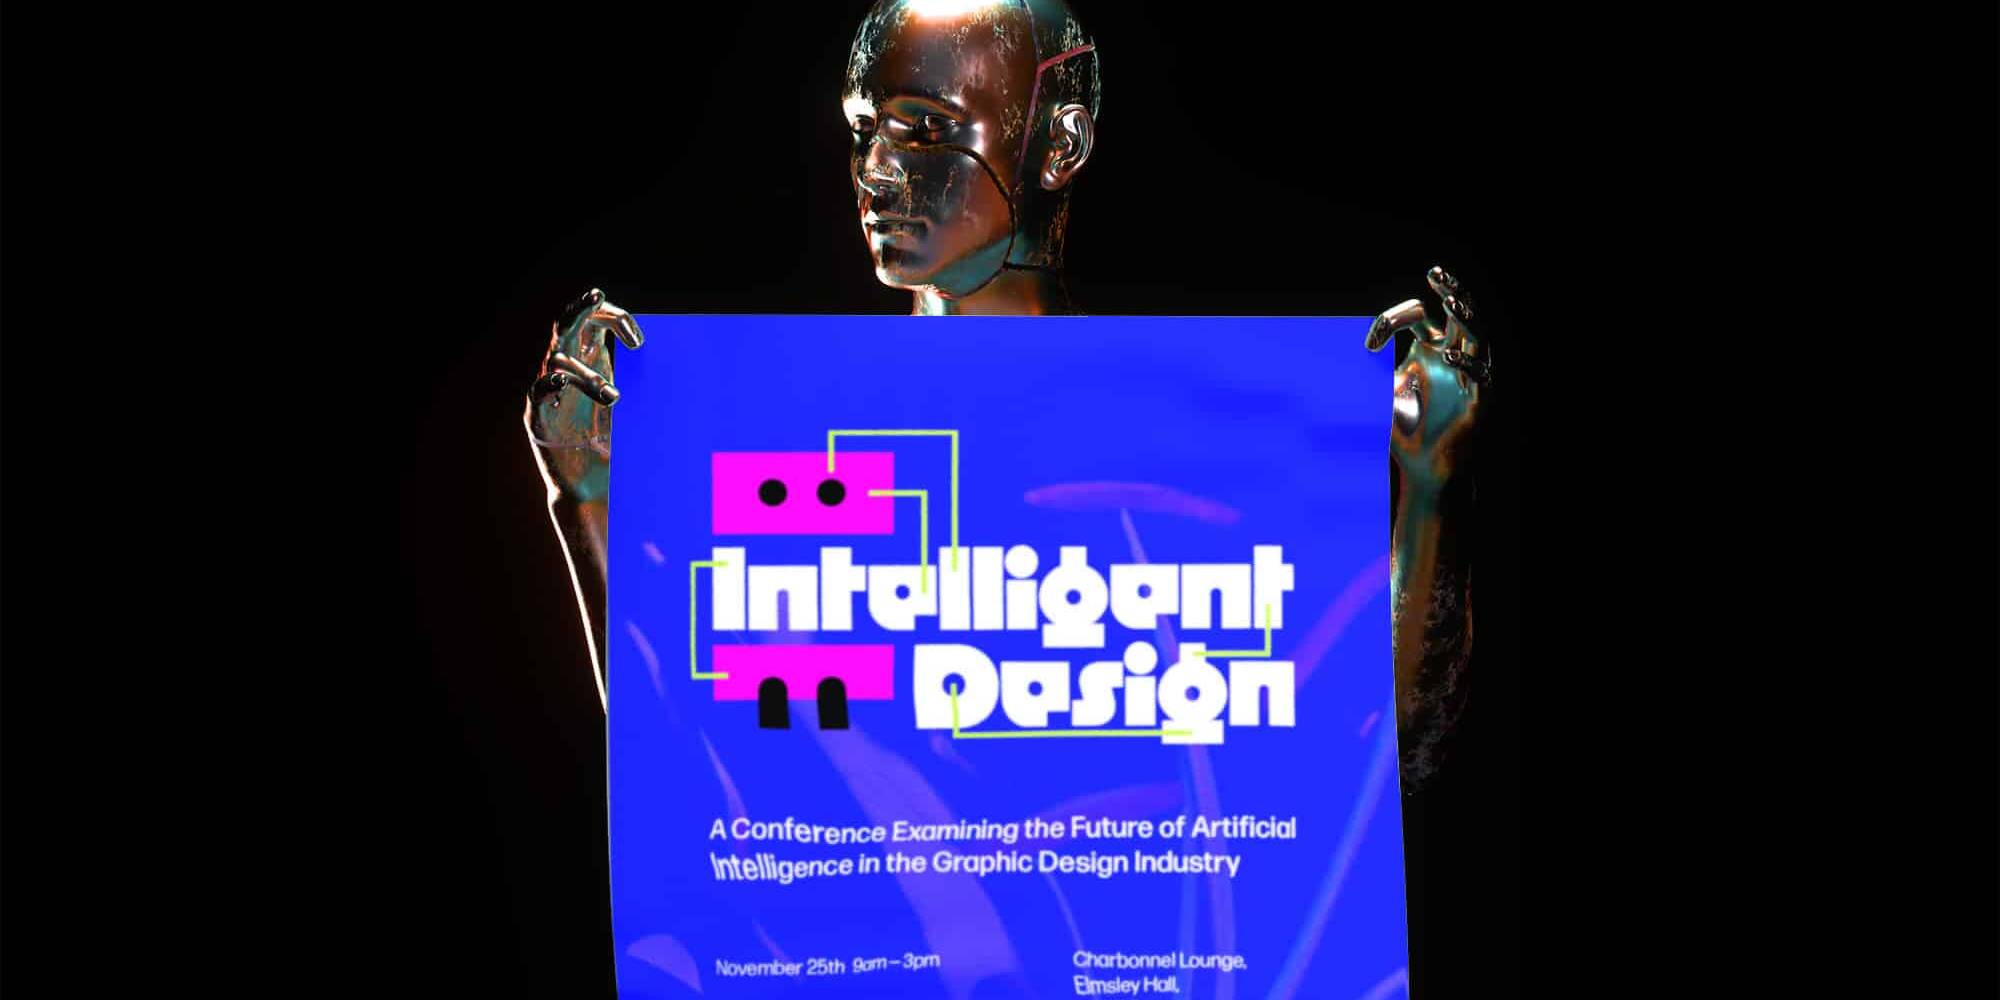 AI-conference-identity-design-toronto-ontario-ft6